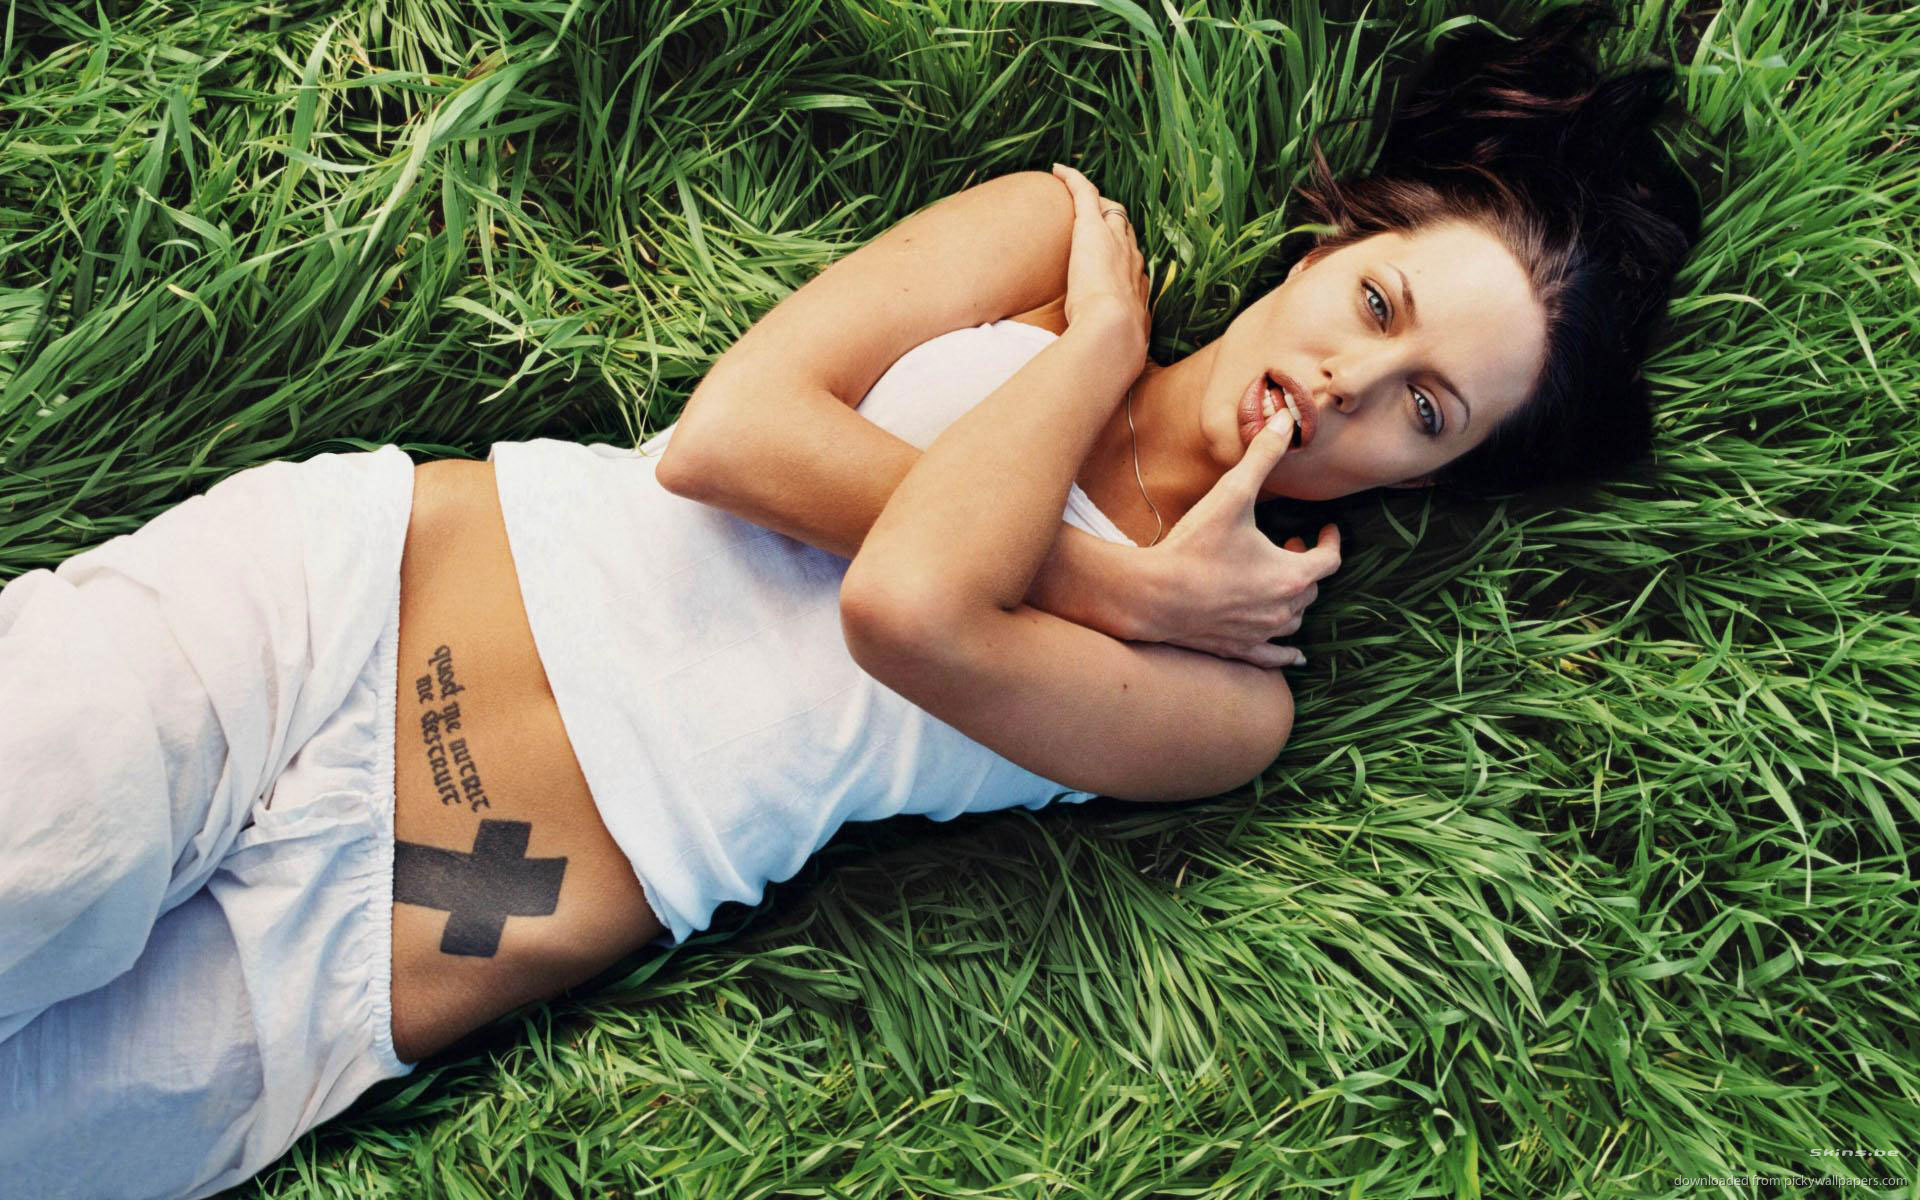 Sacred Fearless Angelina Jolie Tattoo Designs Meanings 2019 regarding measurements 1920 X 1200